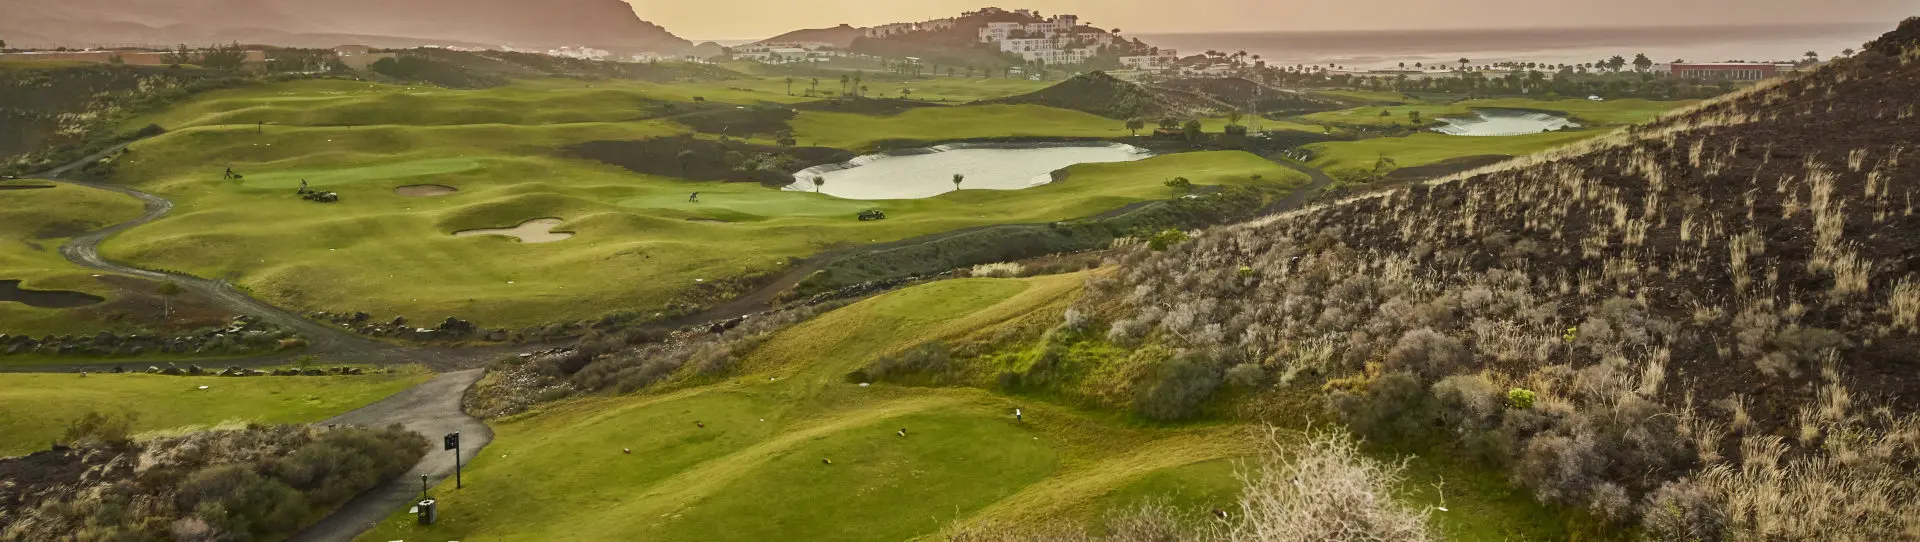 Spain golf courses - Las Playitas Golf Course - Photo 3